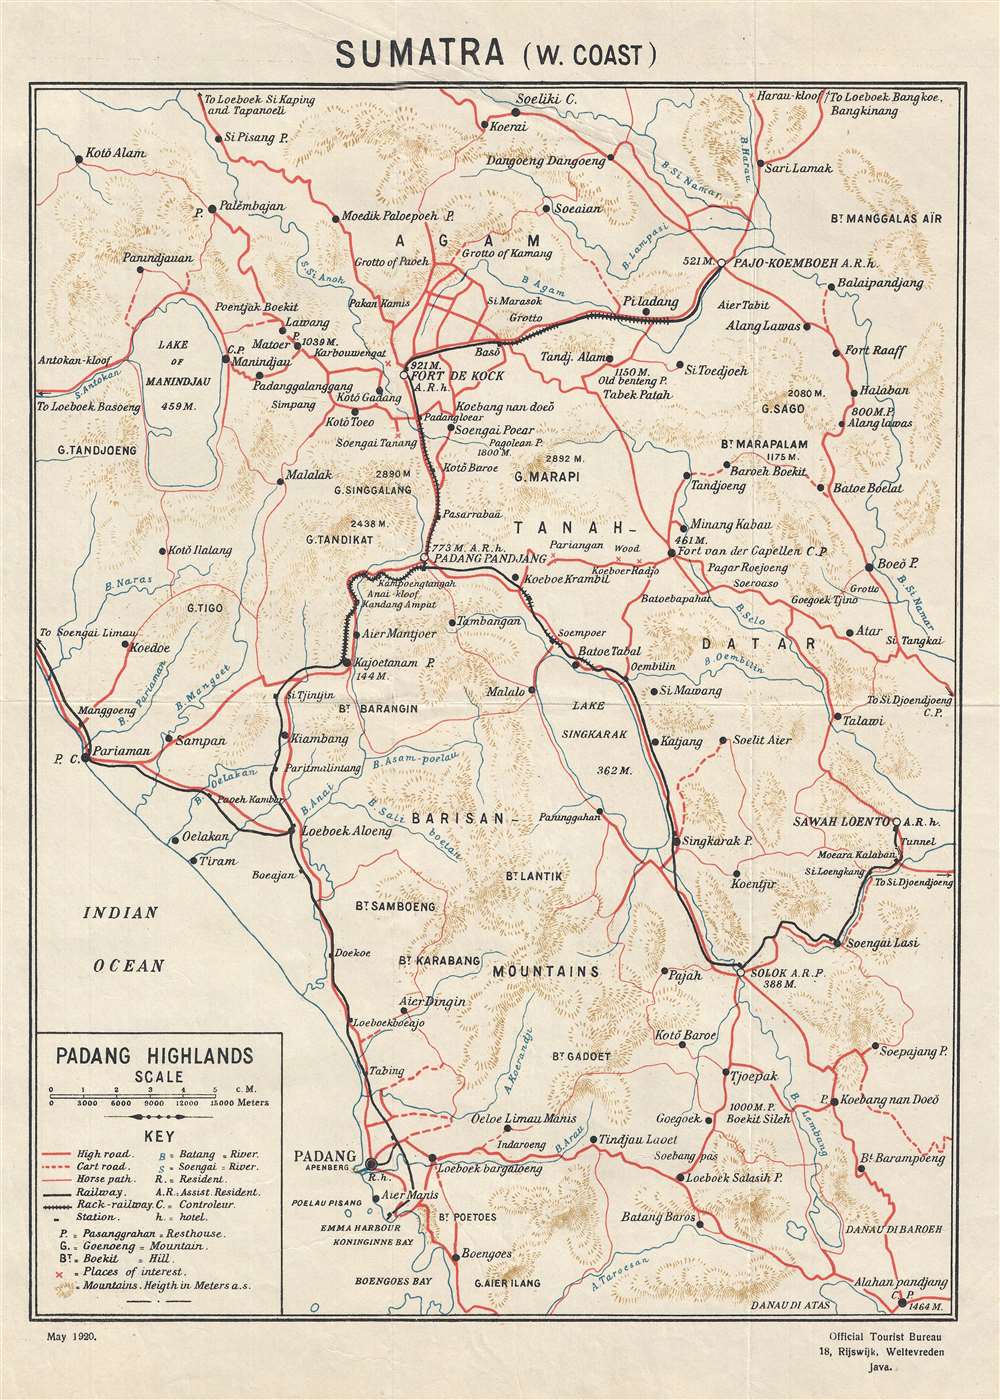 1920 Dutch East Indies Tourist Bureau Map of the Padang Highlands in Sumatra